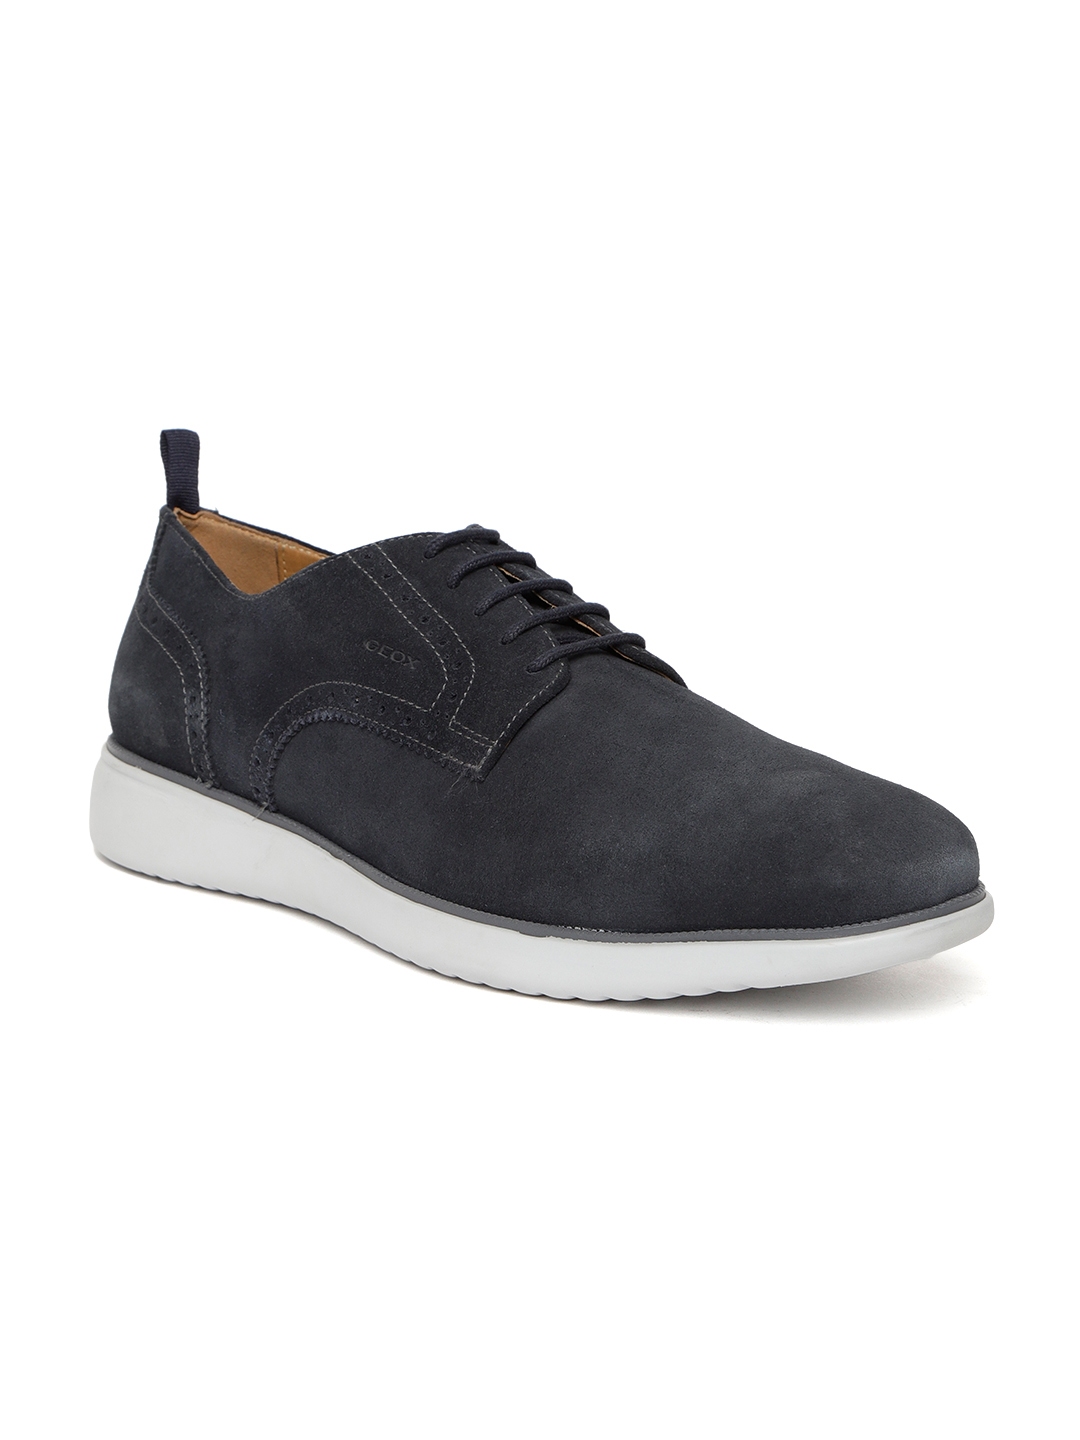 Buy Geox Men Navy Blue Suede Derbys - Casual Shoes for Men 7520683 | Myntra